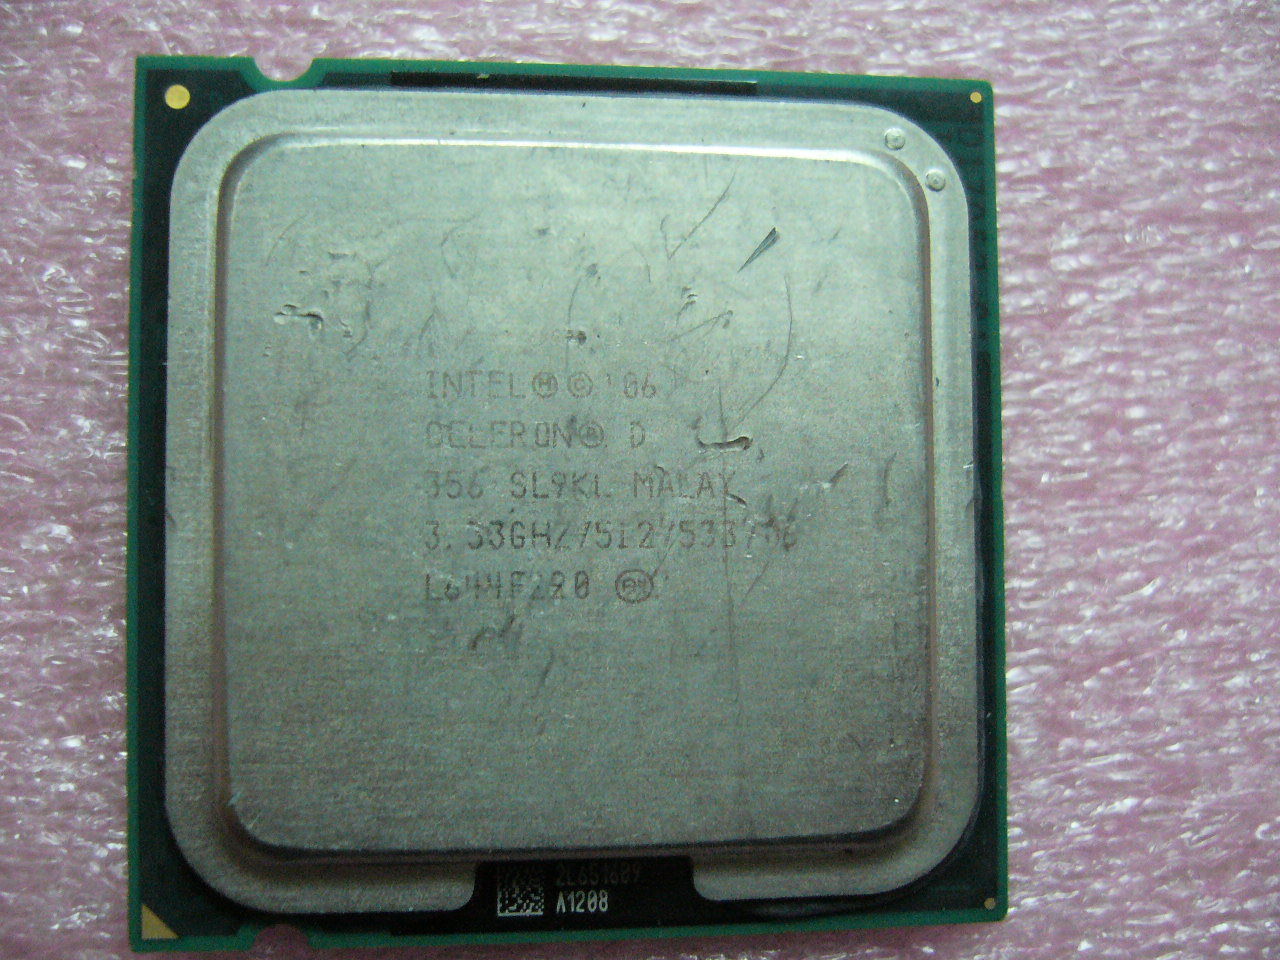 INTEL Celeron D CPU 356 3.33GHz 512/533Mhz LGA775 SL9KL